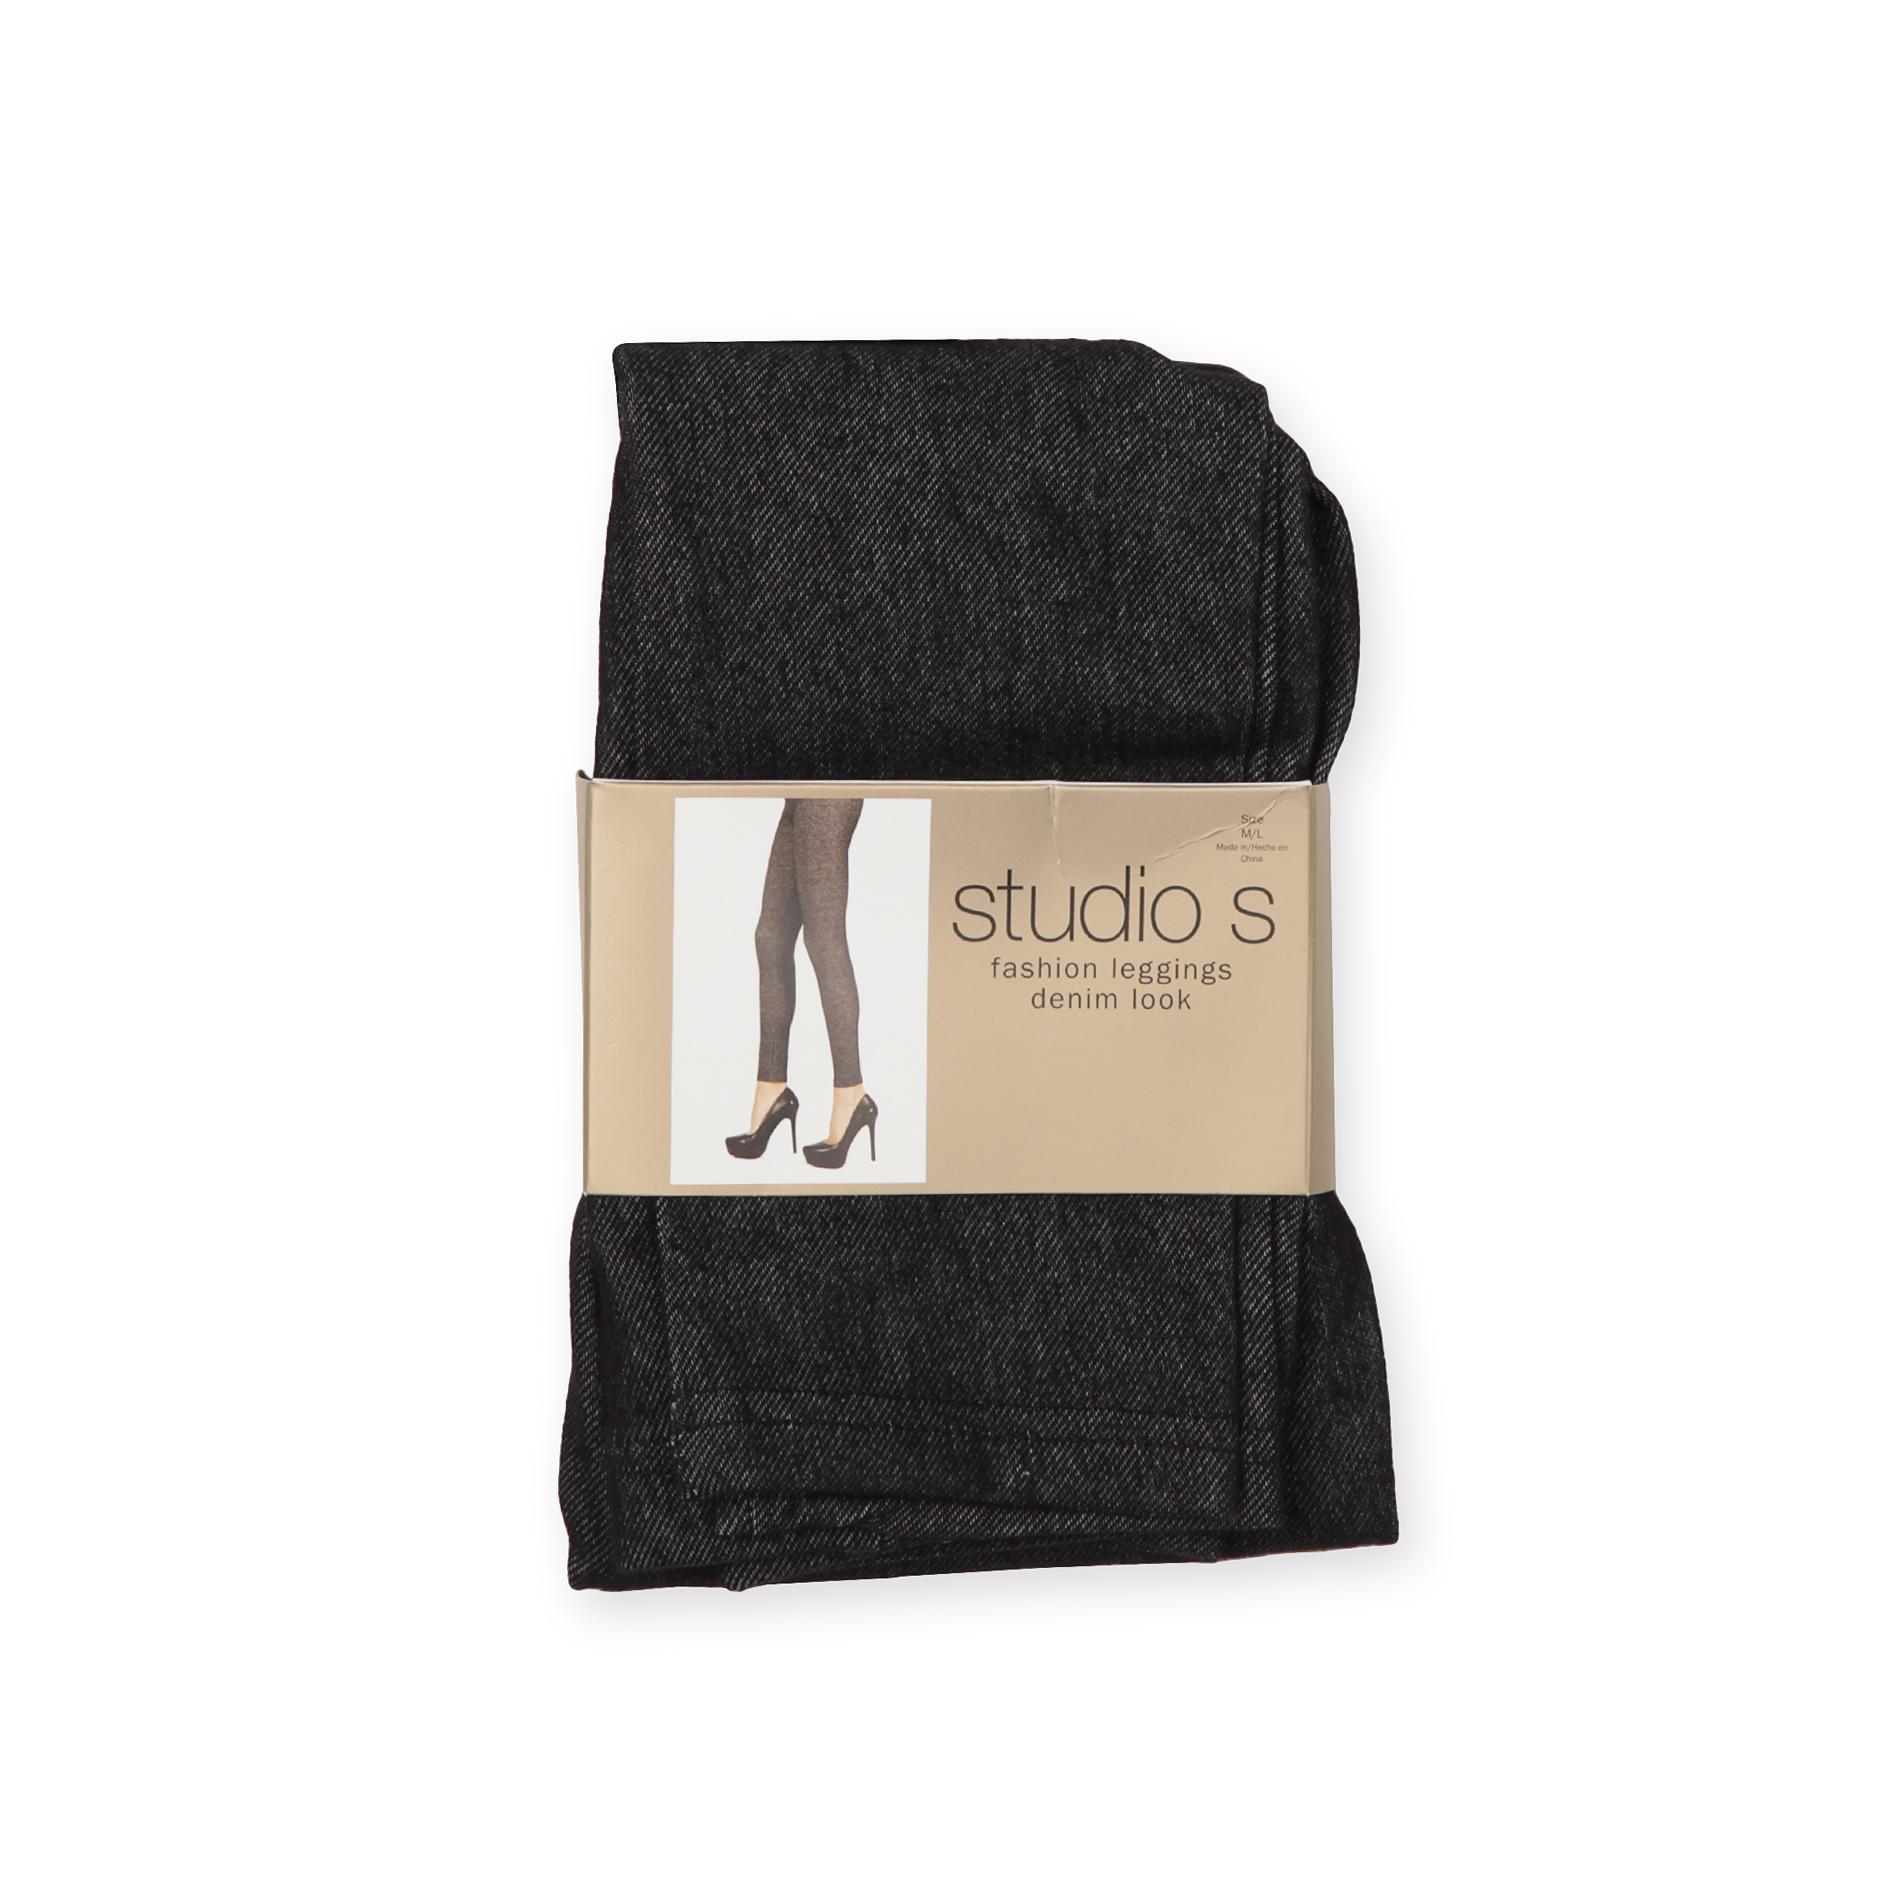 Studio S Women's Fashion Leggings - Denim Look